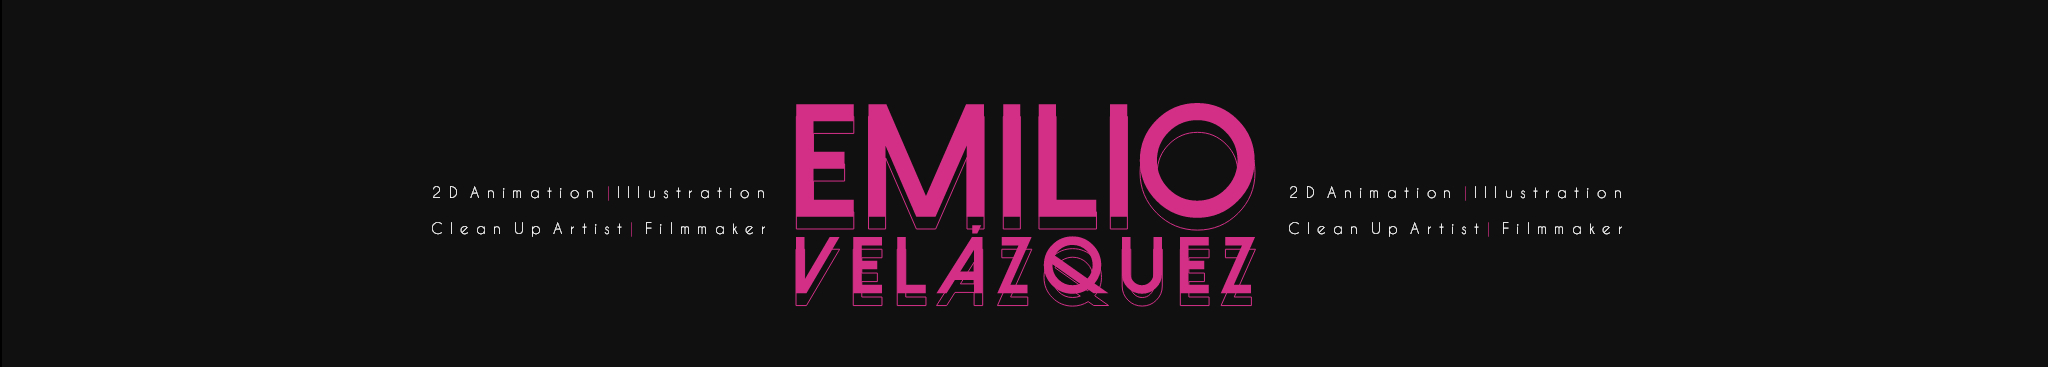 Emilio Velázquez's profile banner